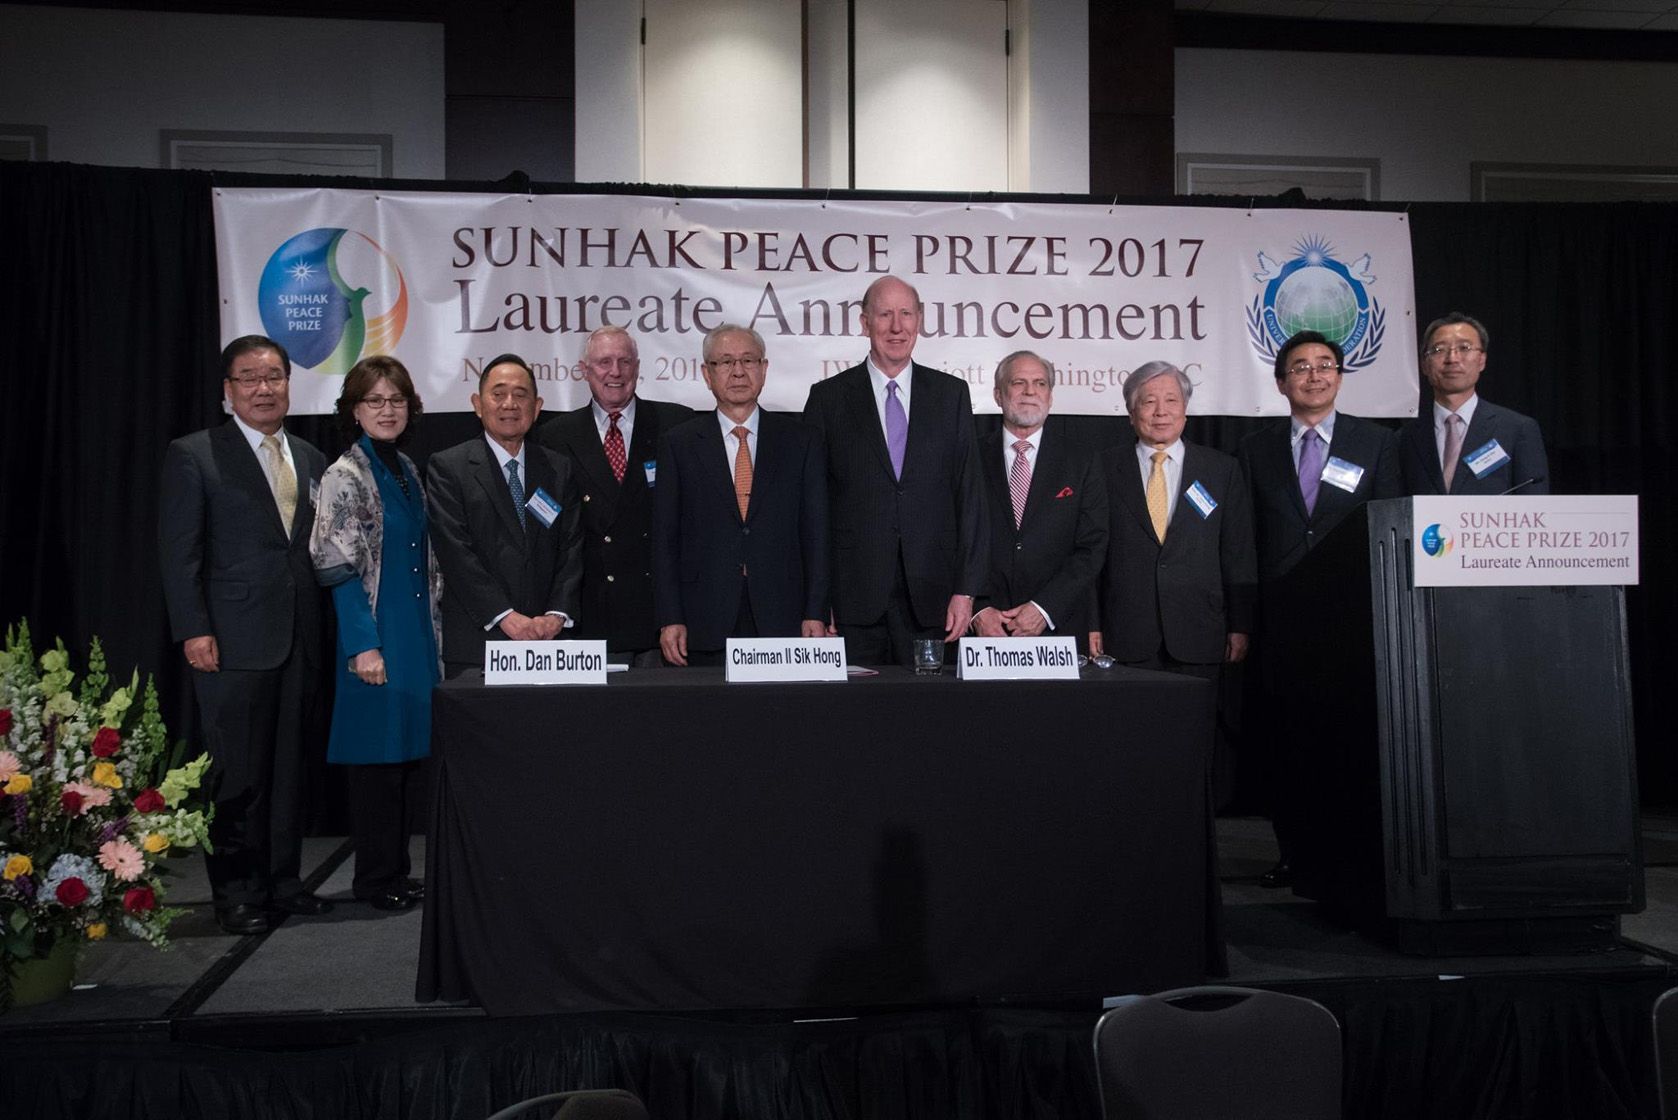 2017 Sunhak Peace Prize Laureate Announcement (November 29, 2016, Washington DC, USA)